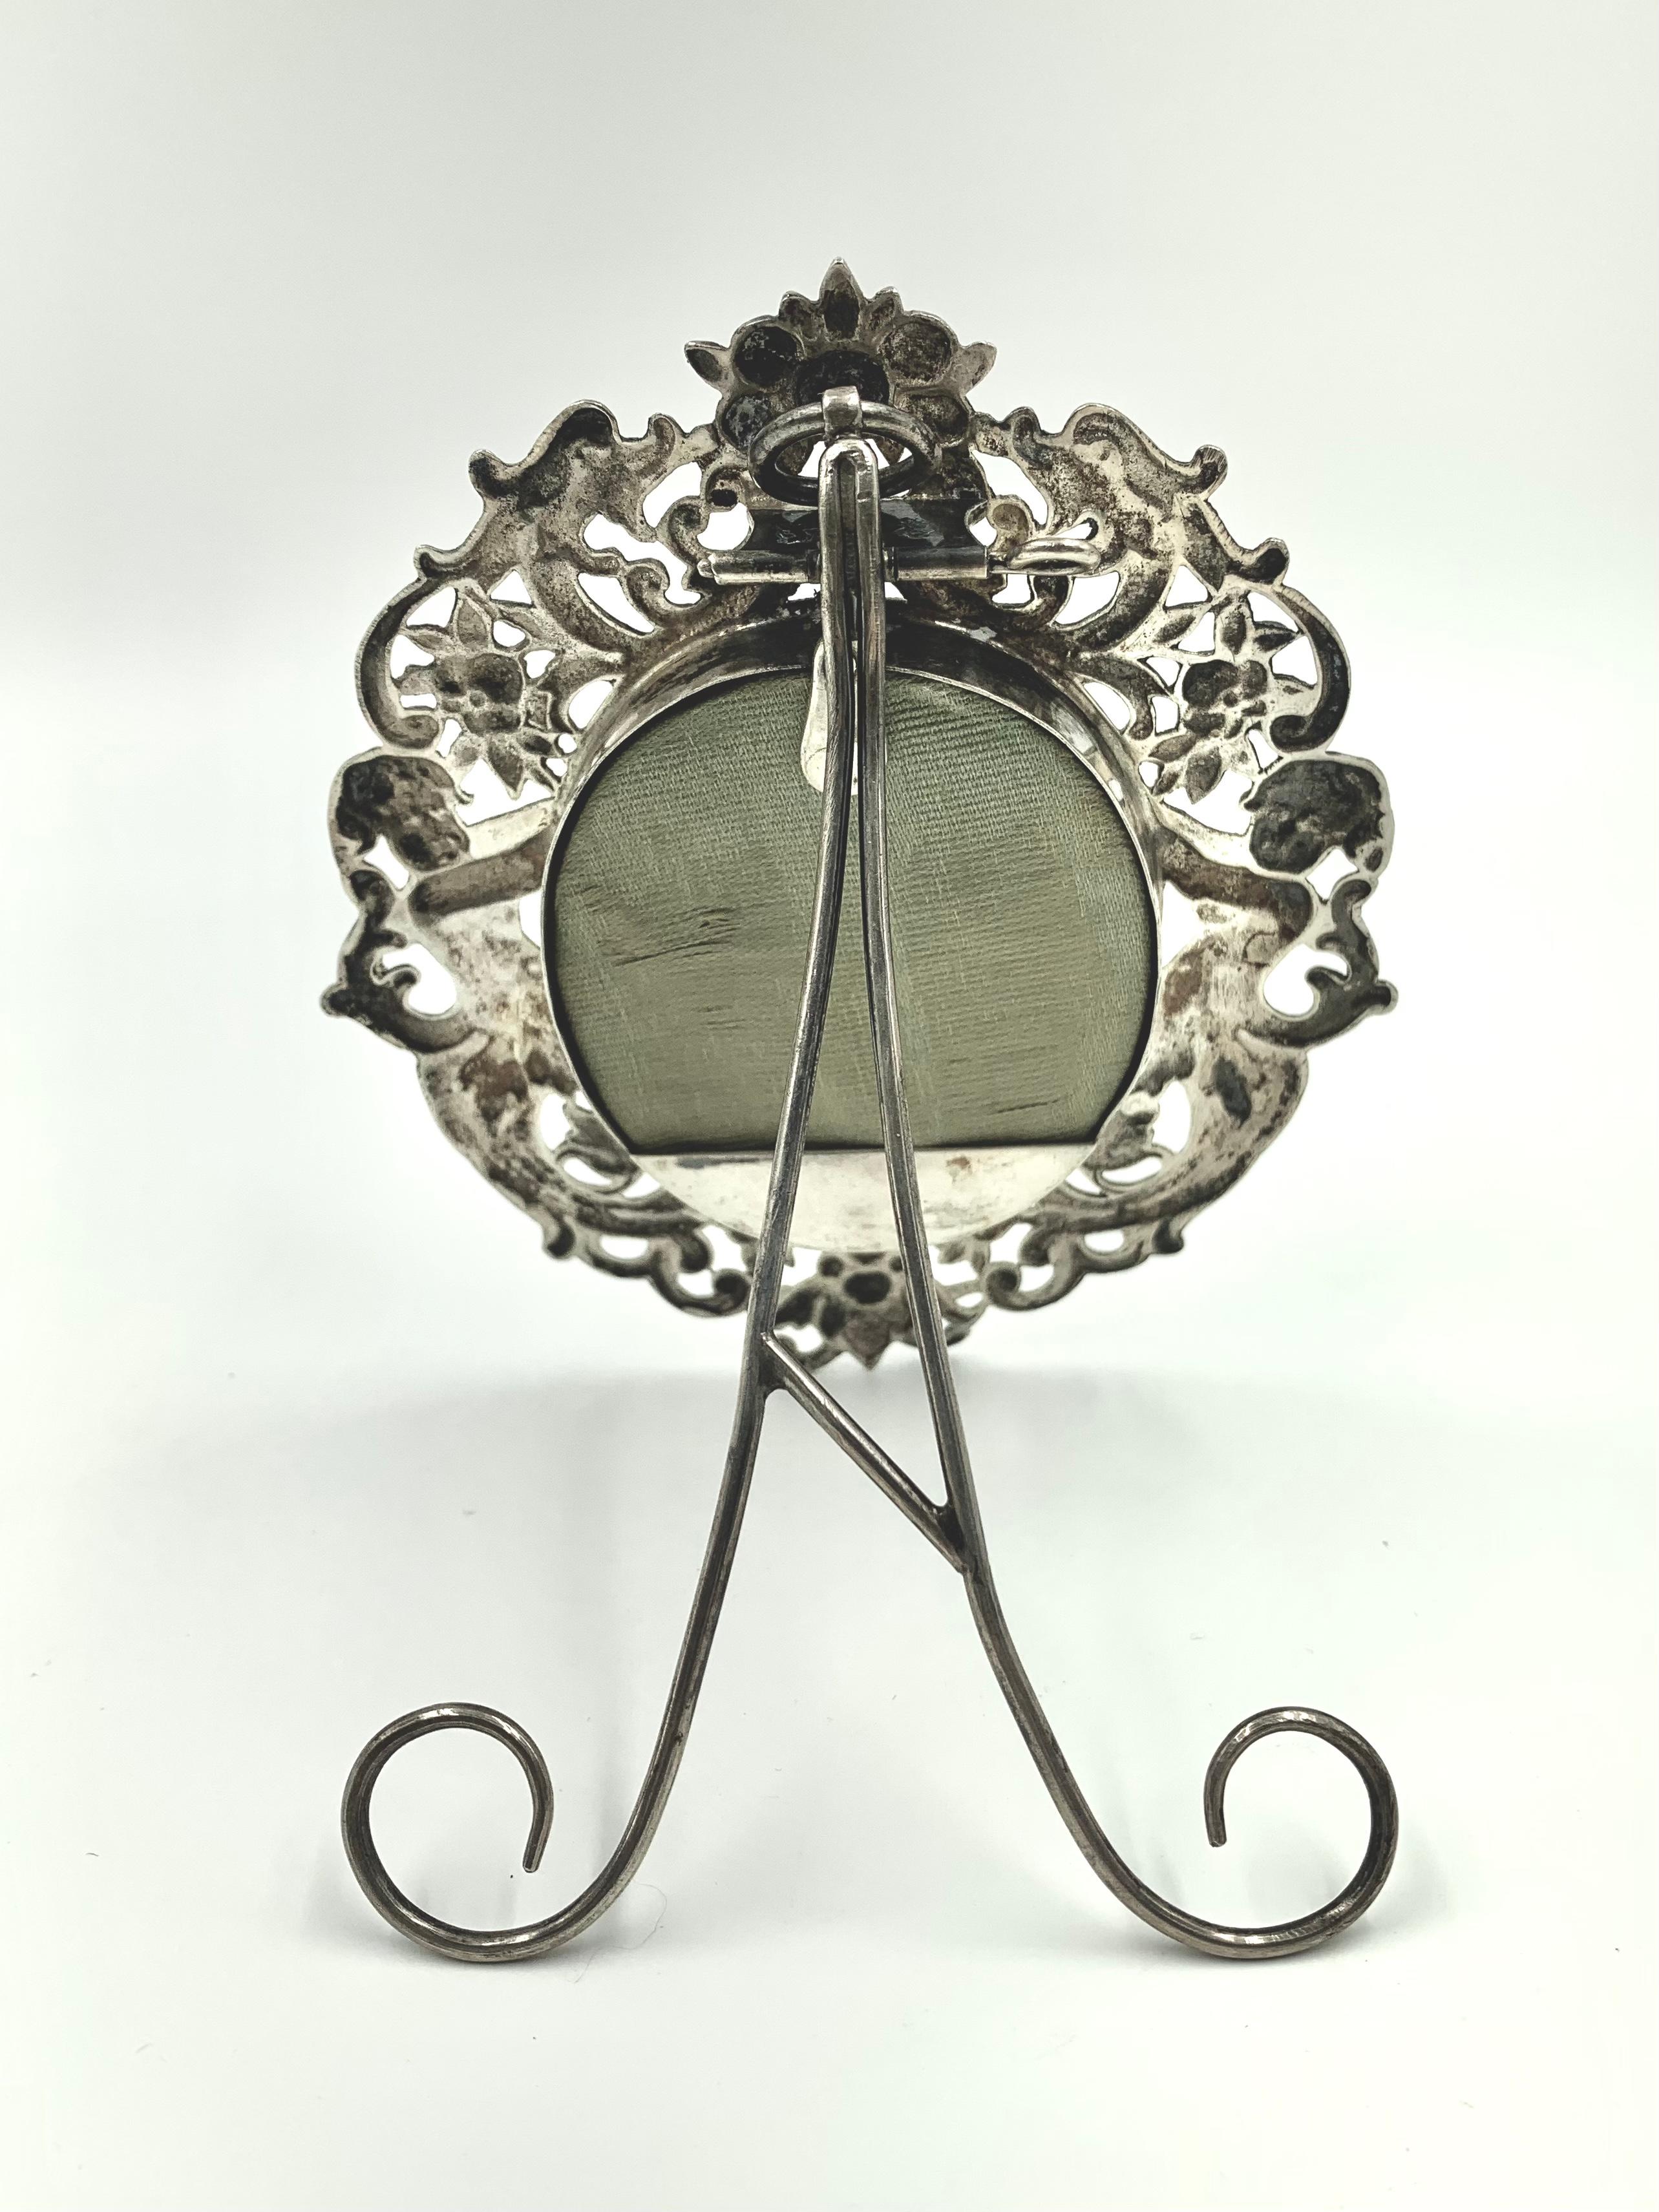 ornate circular frame